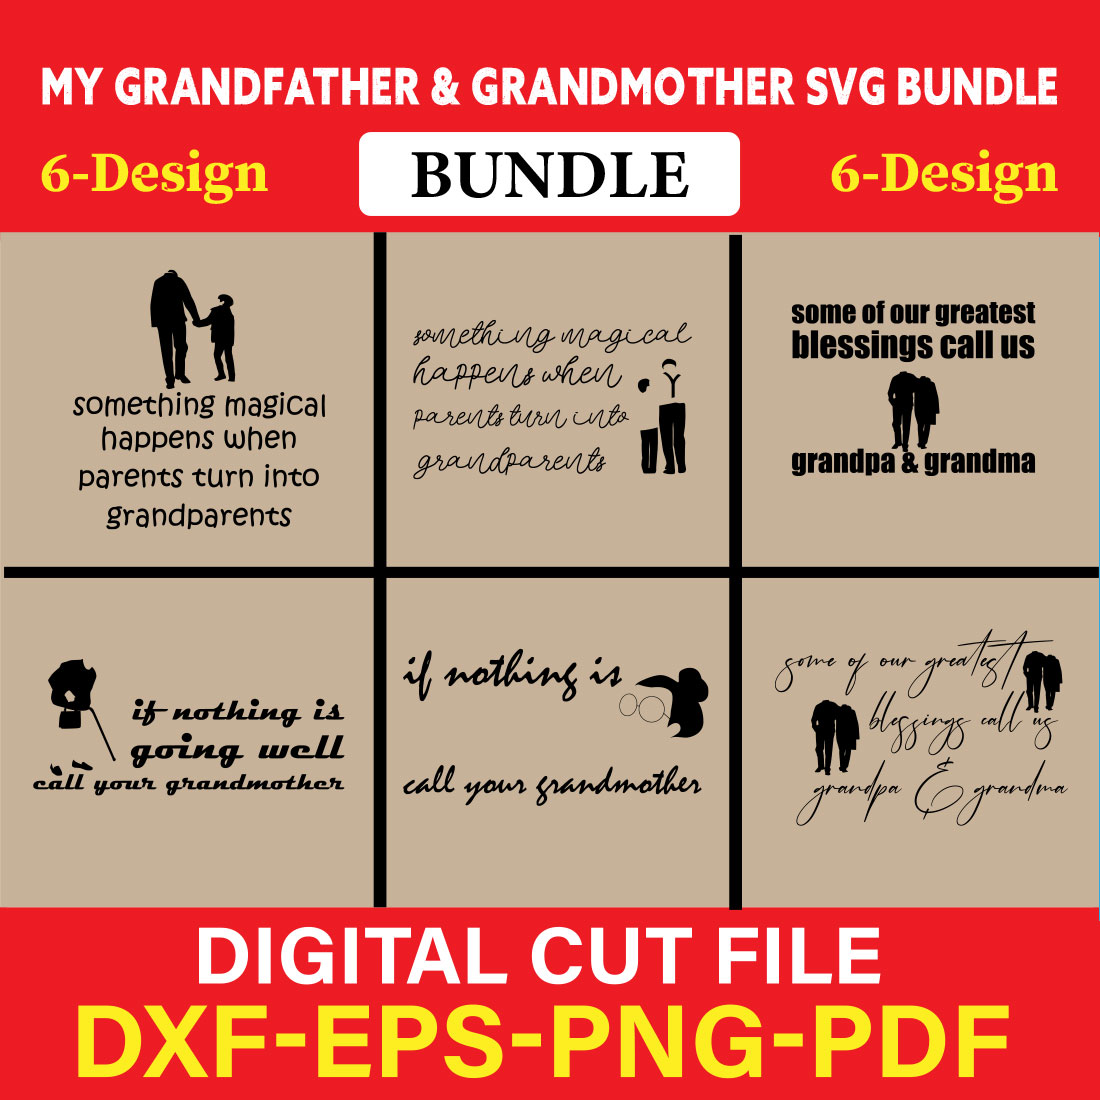 My Grandfather & Grandmother T-shirt Design Bundle Vol-1 cover image.